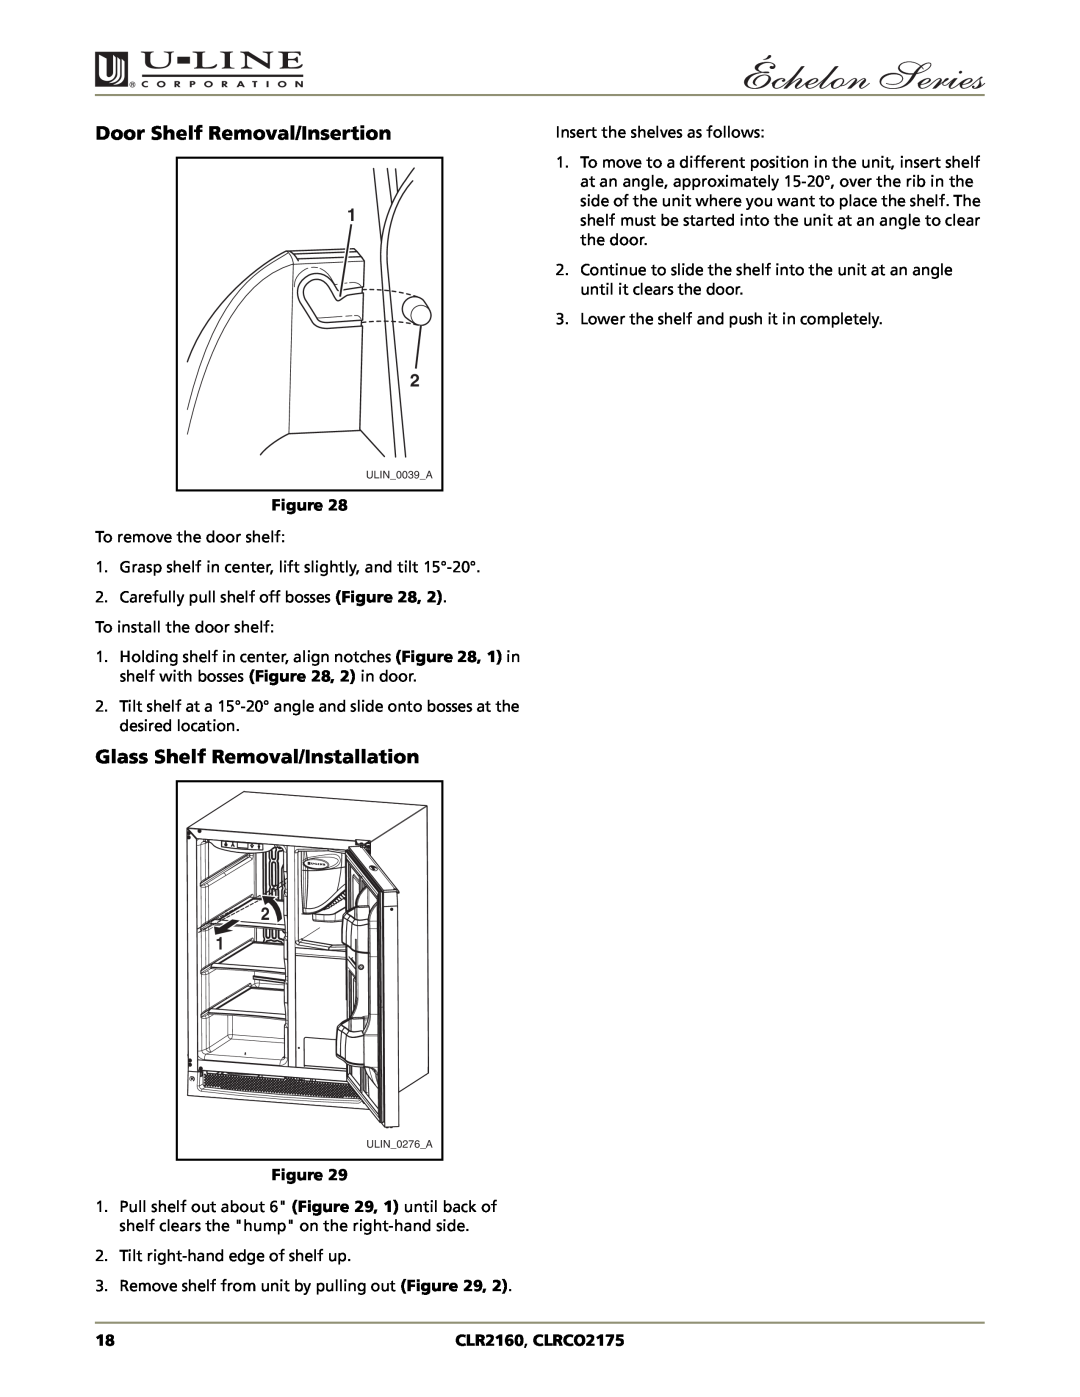 U-Line CLRCO2175, CLR2160 manual Door Shelf Removal/Insertion, Glass Shelf Removal/Installation 